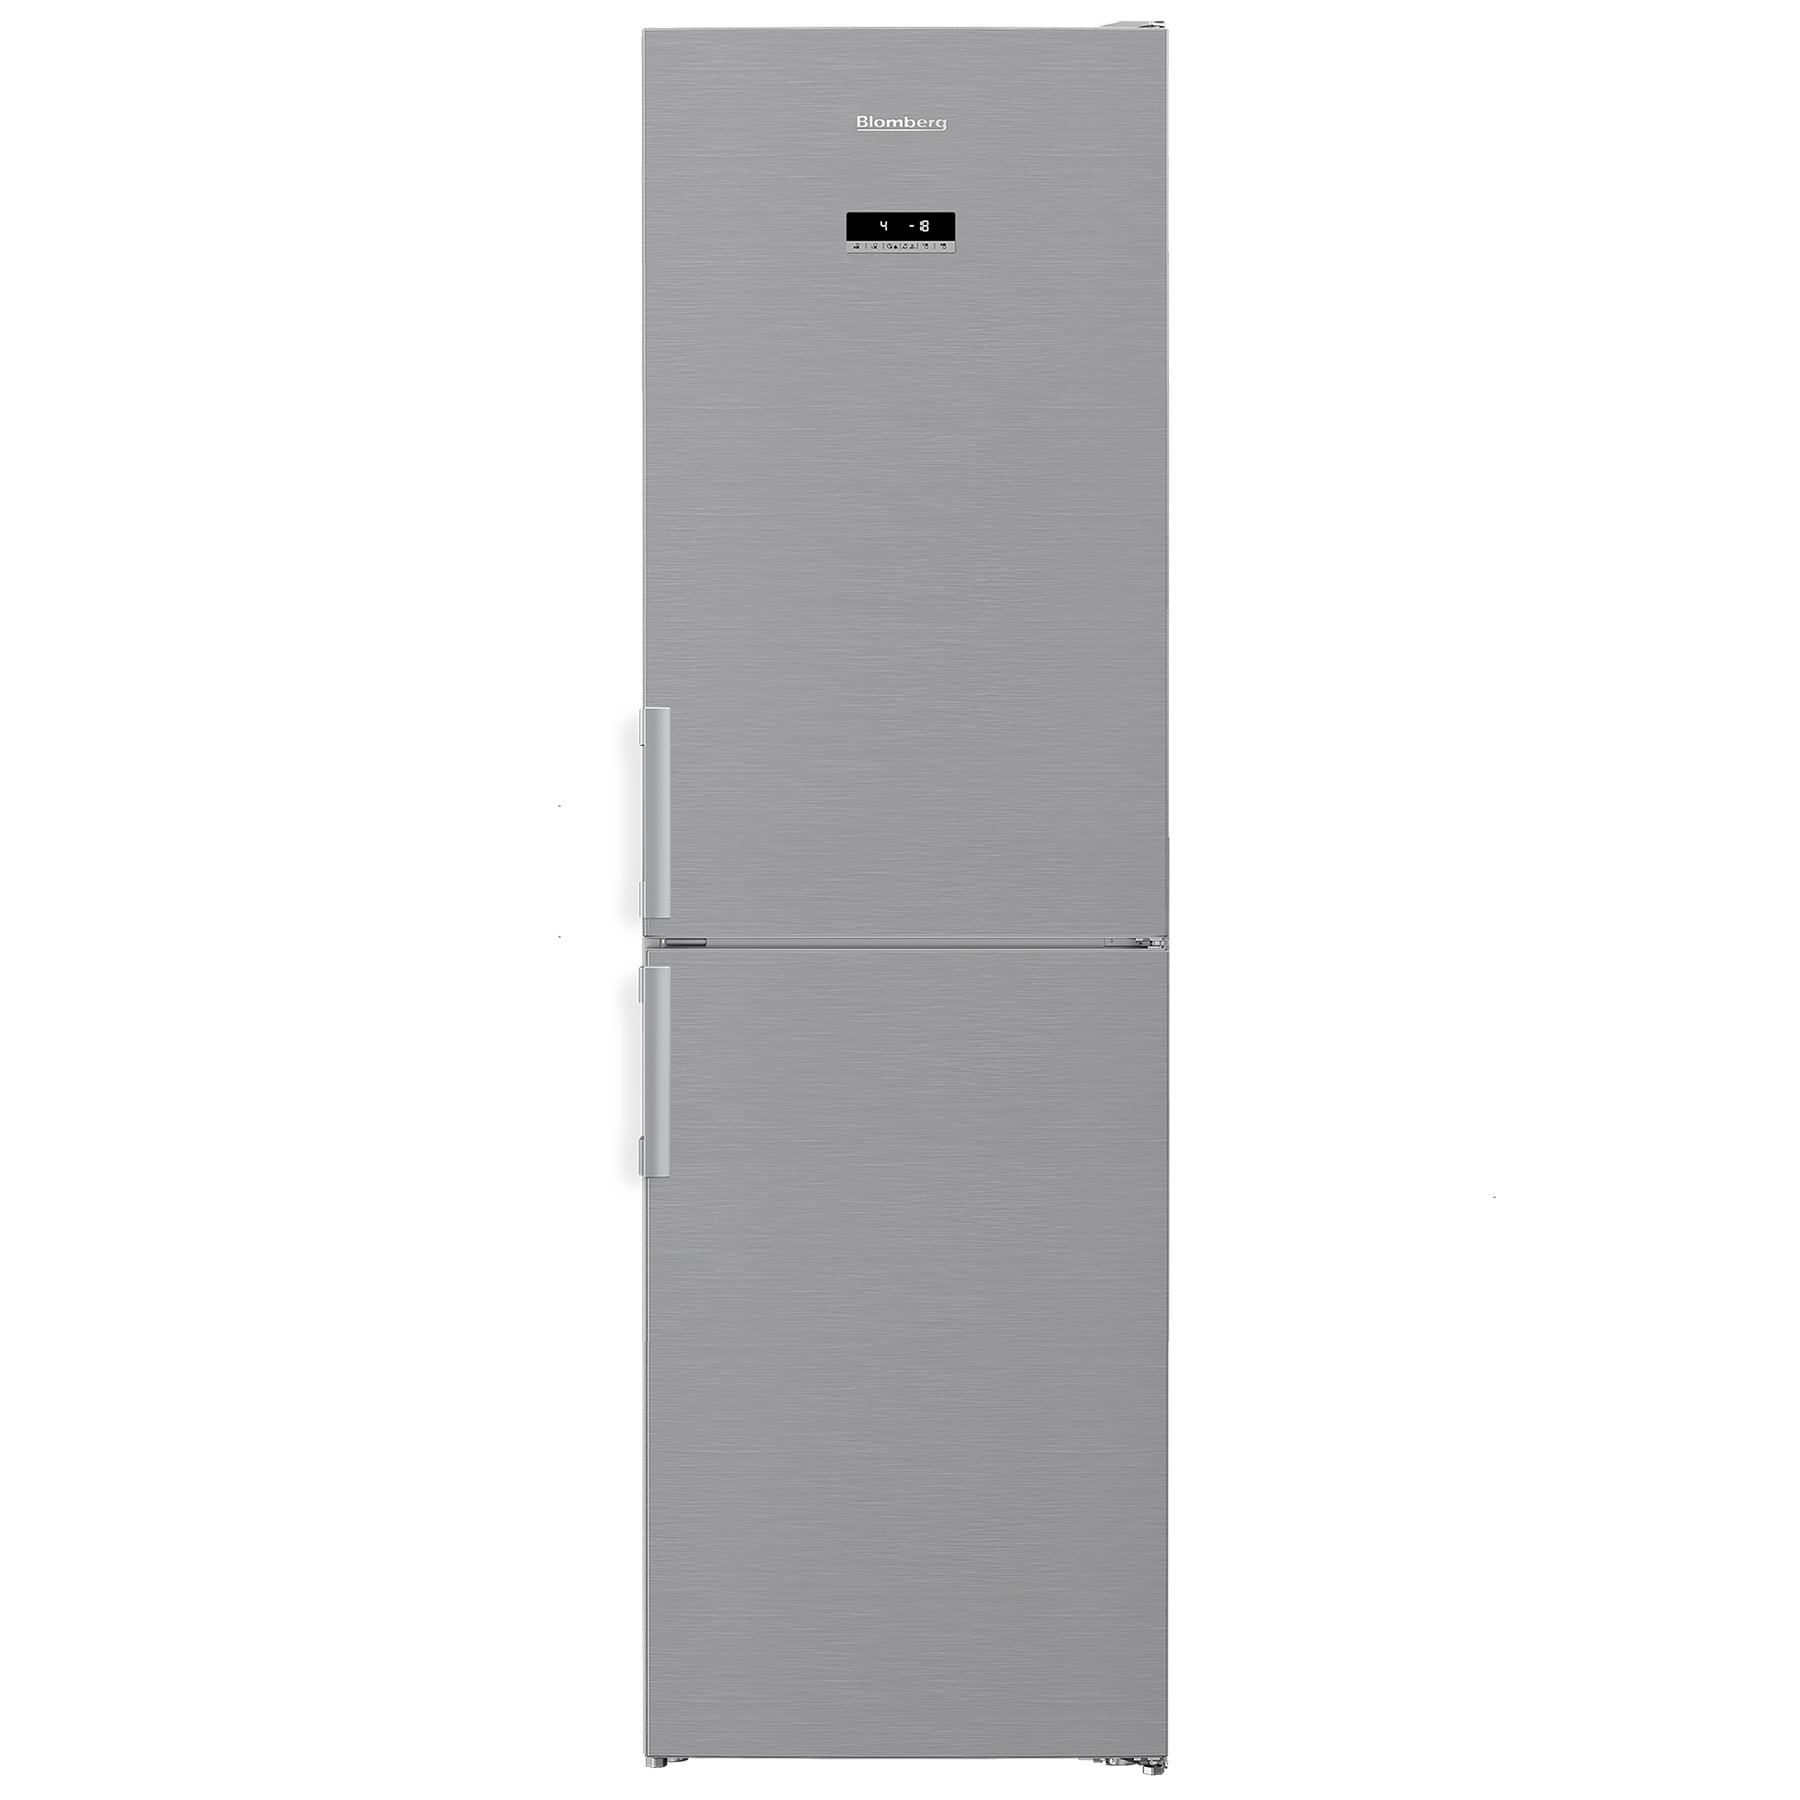 Image of Blomberg KND464VPS 60cm Frost Free Fridge Freezer in St Steel 2 03m E